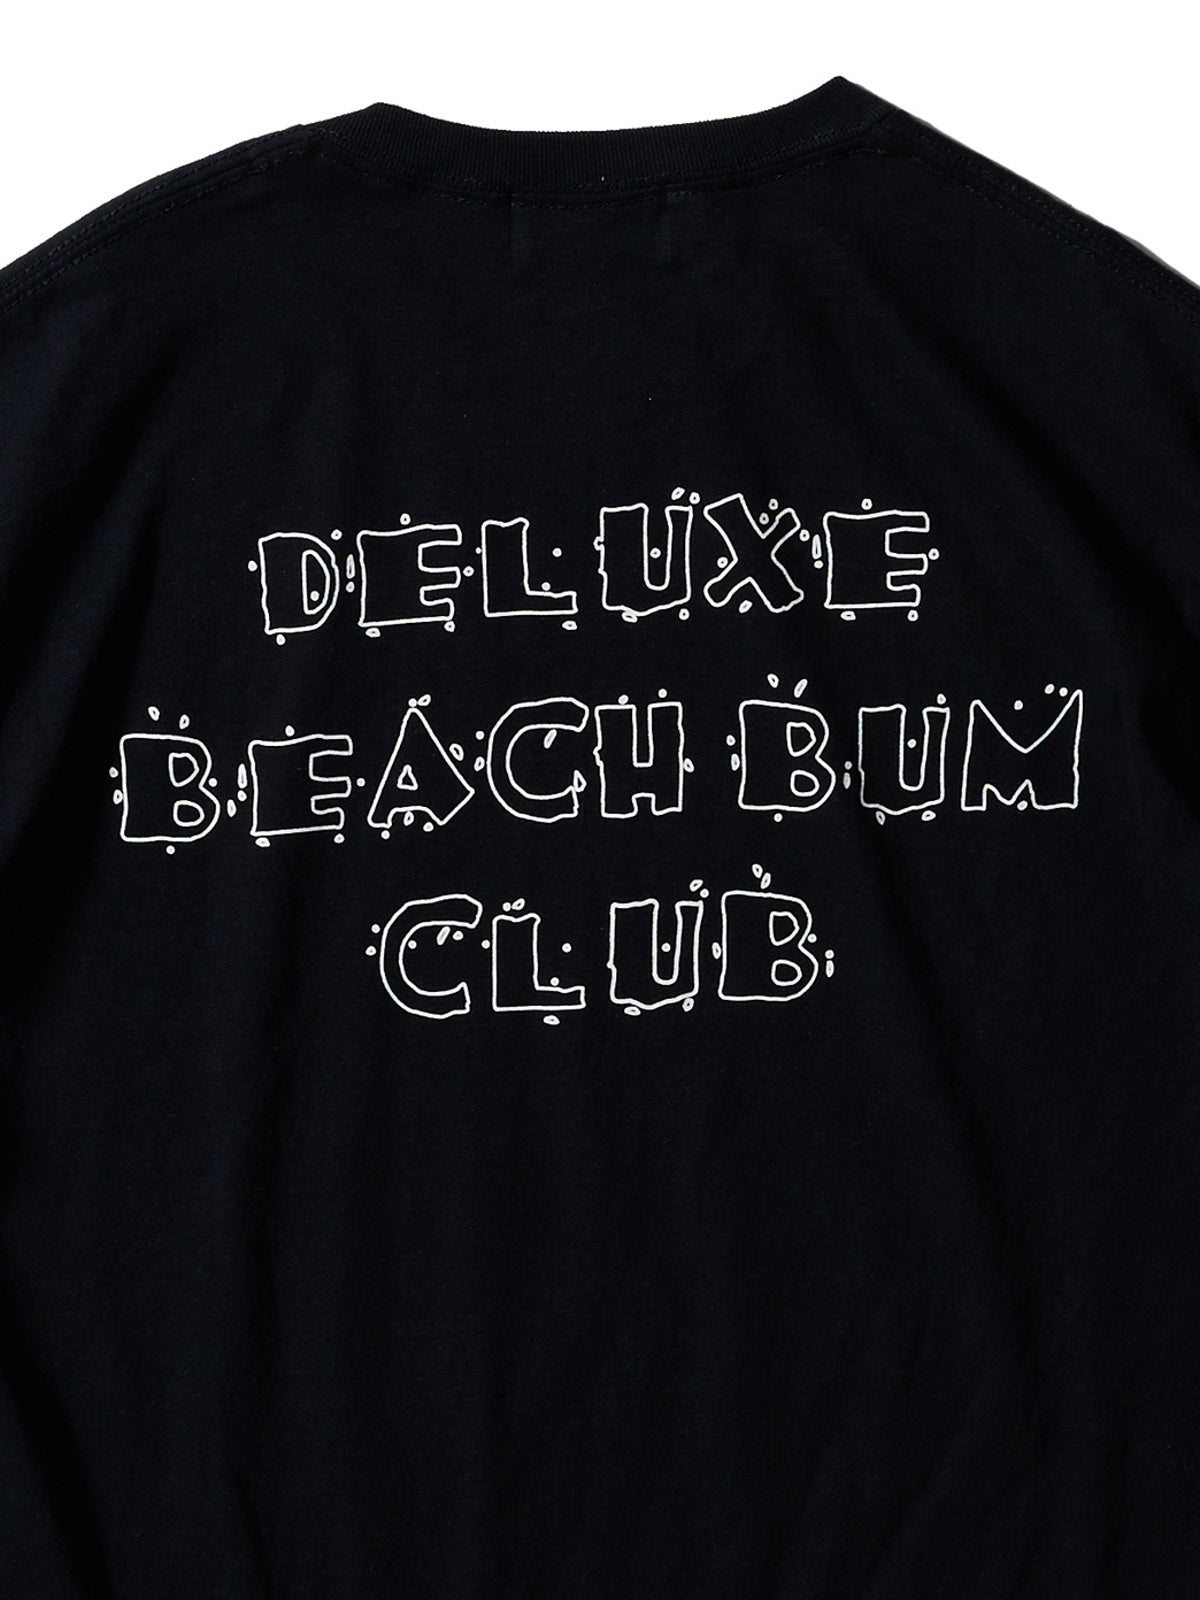 DELUXE | Tom&Jerry Beach Bum Club Tee - Black